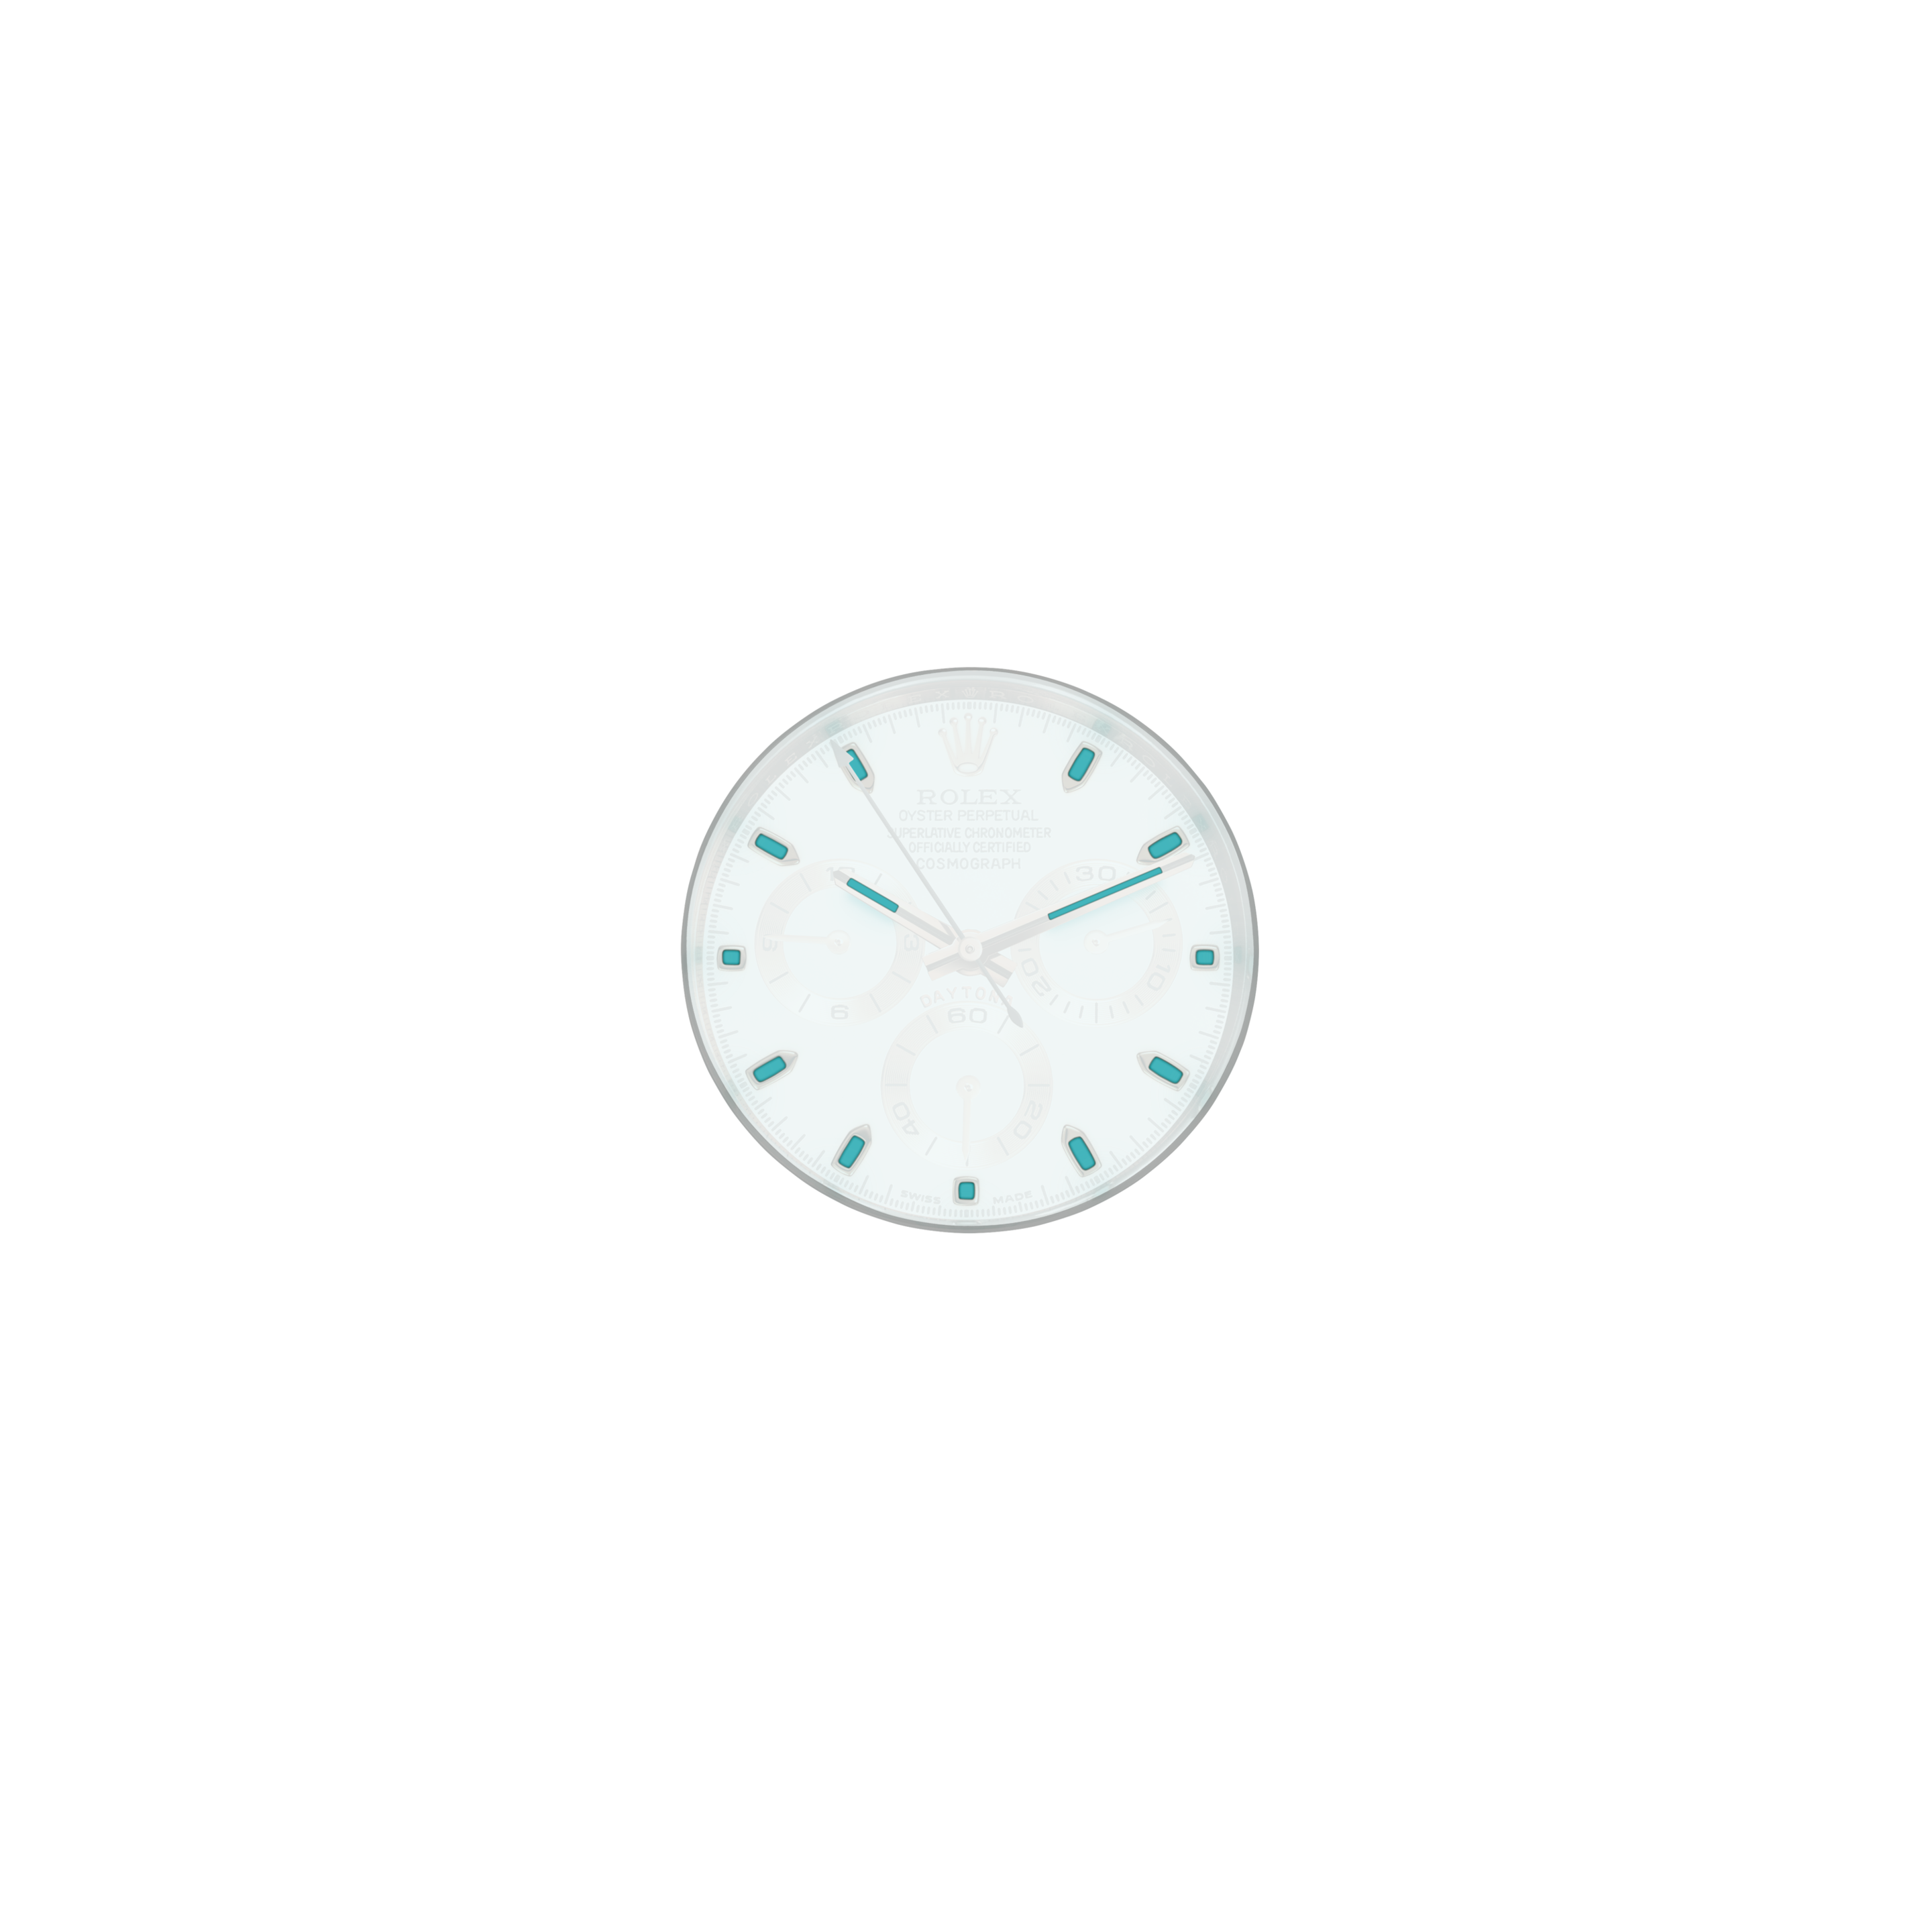 Rolex Gents Wristwatch Chronograph Cosmograph Daytona Ref. 6239